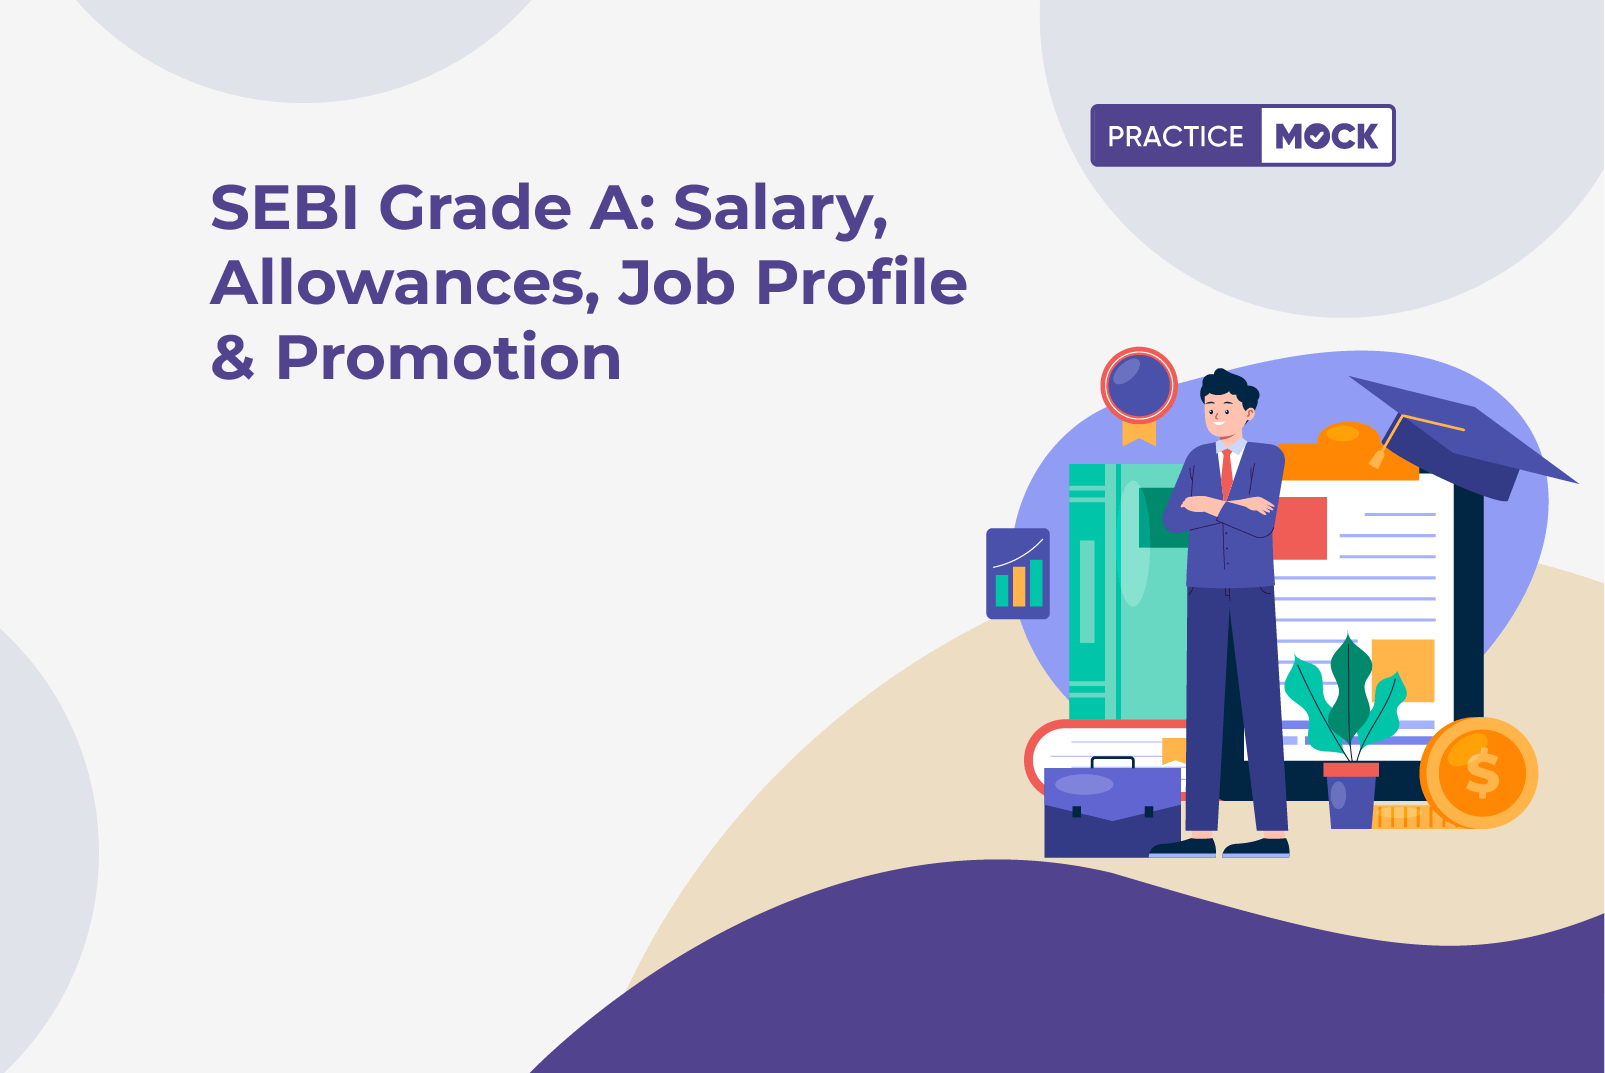 SEBI Grade A Salary, Allowances, Job Profile & Promotion